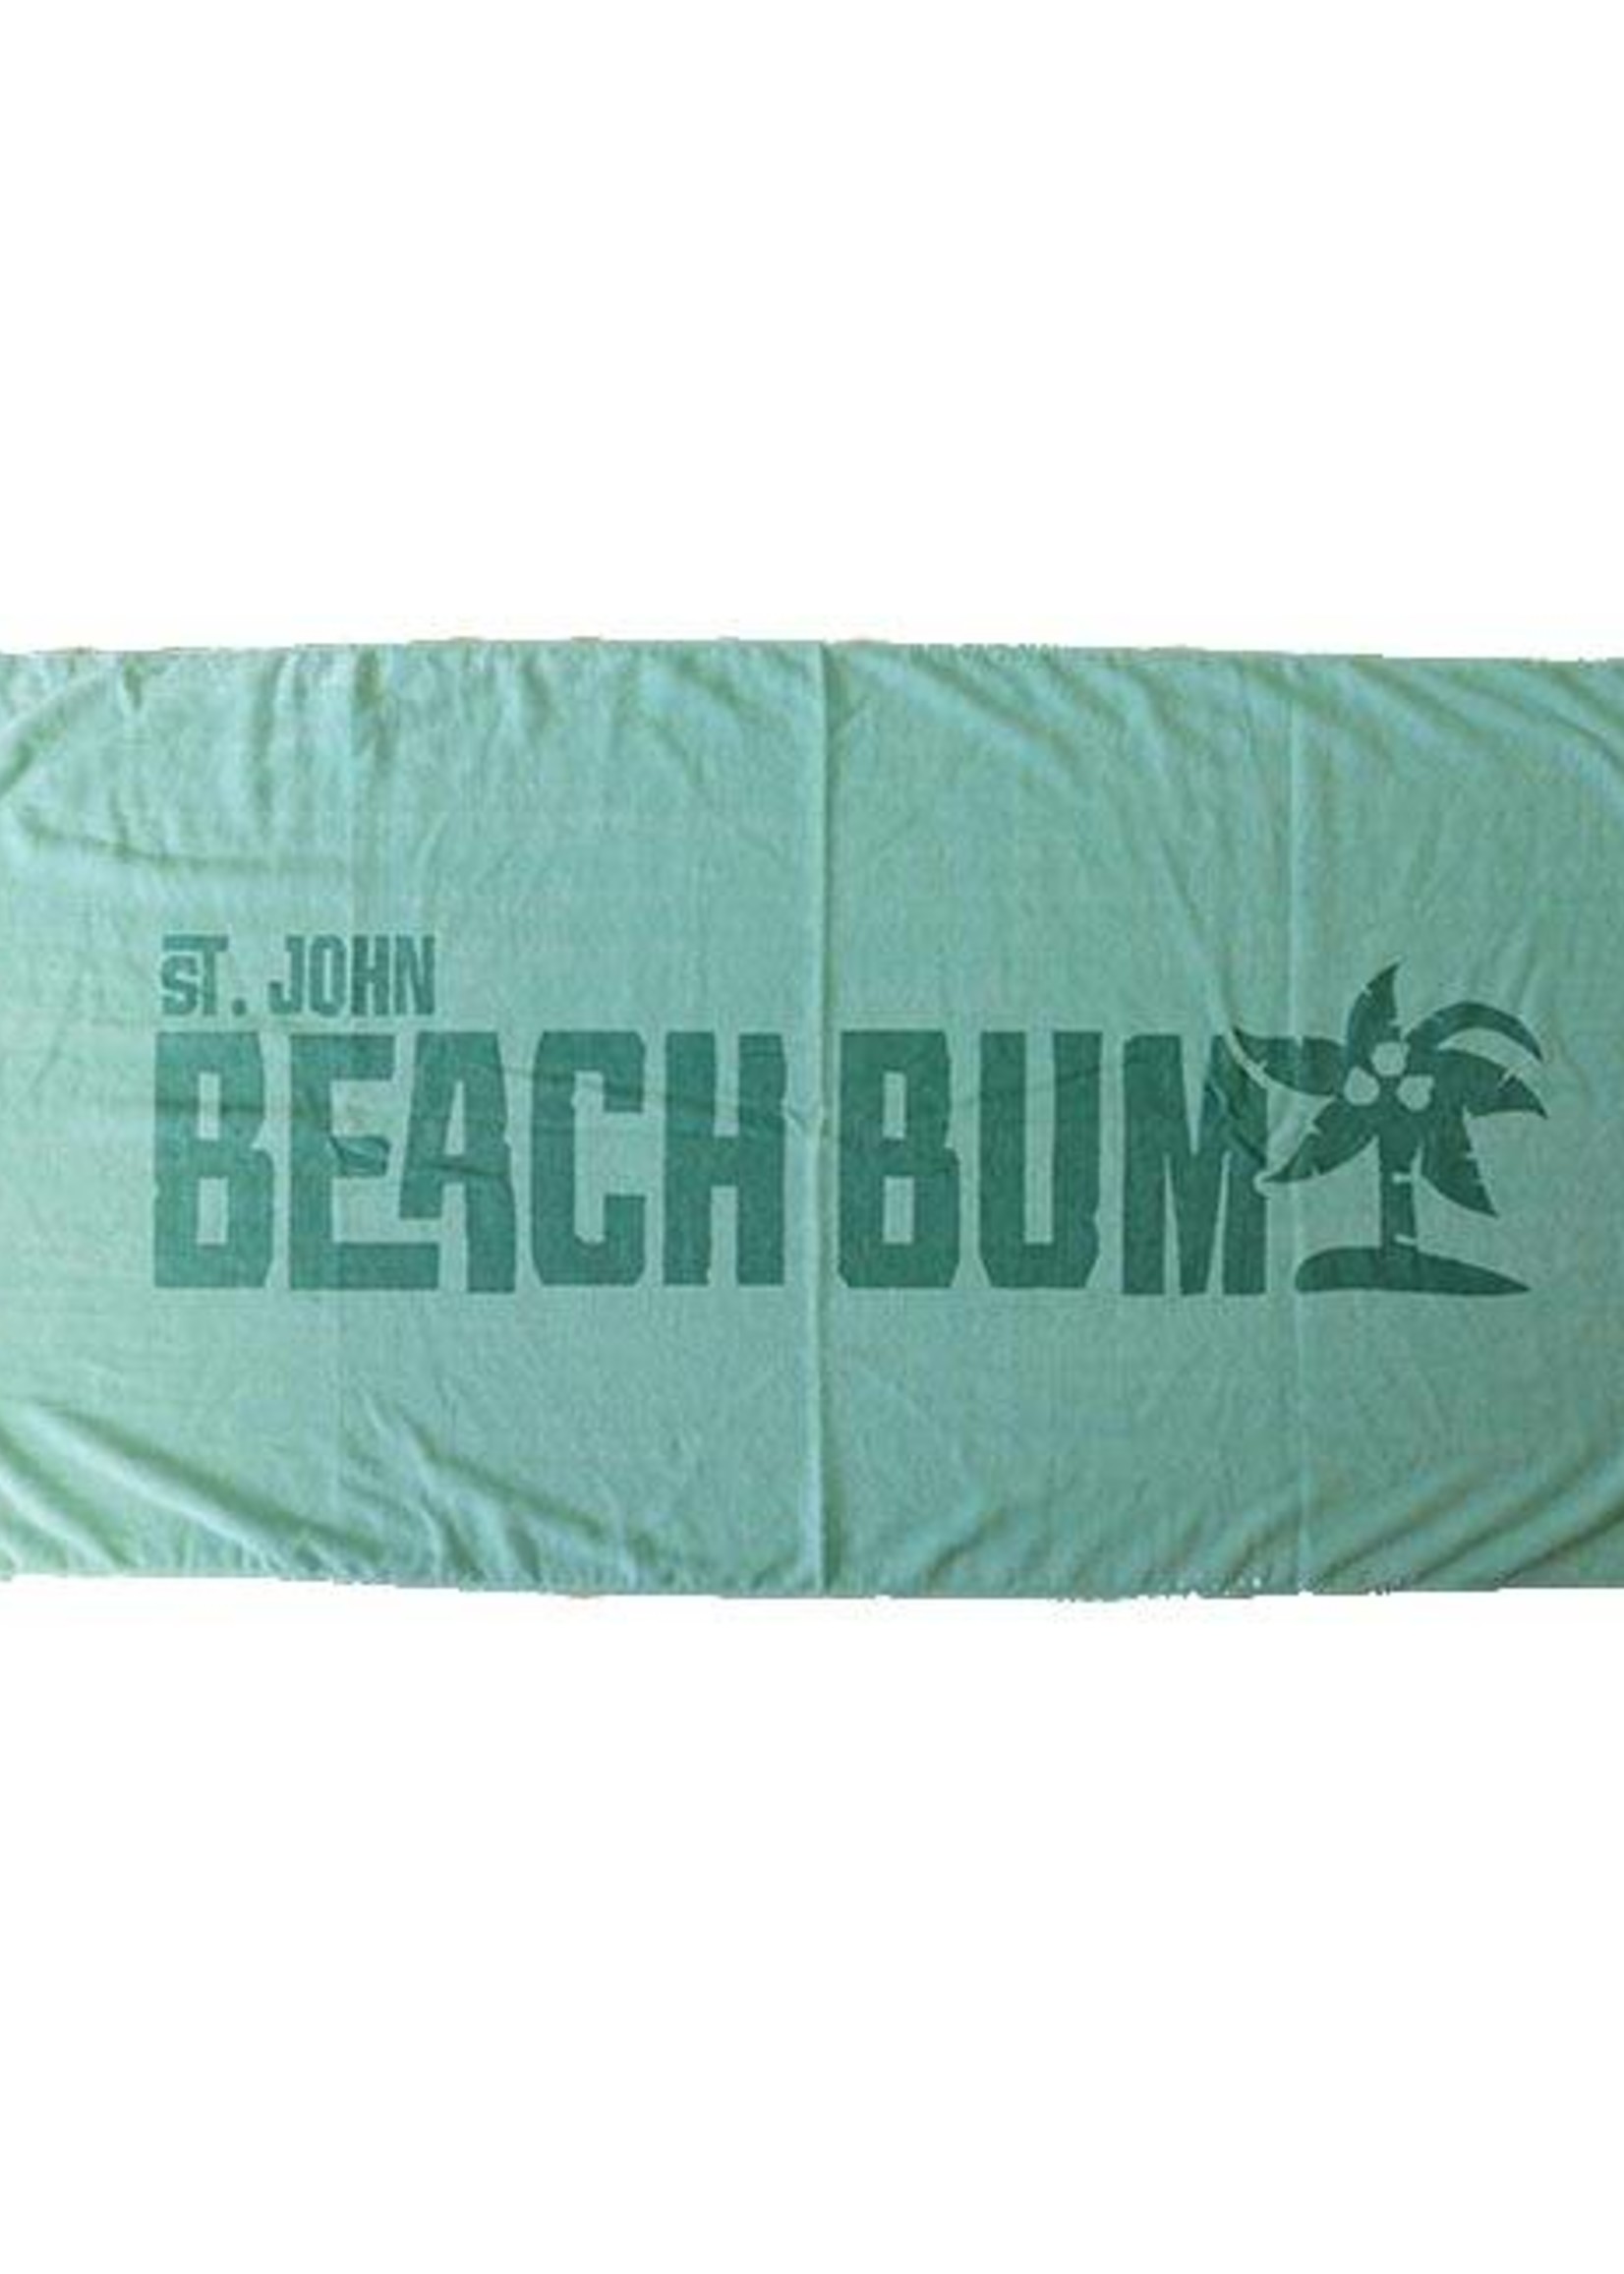 St. John Beach Bum Beach Towel